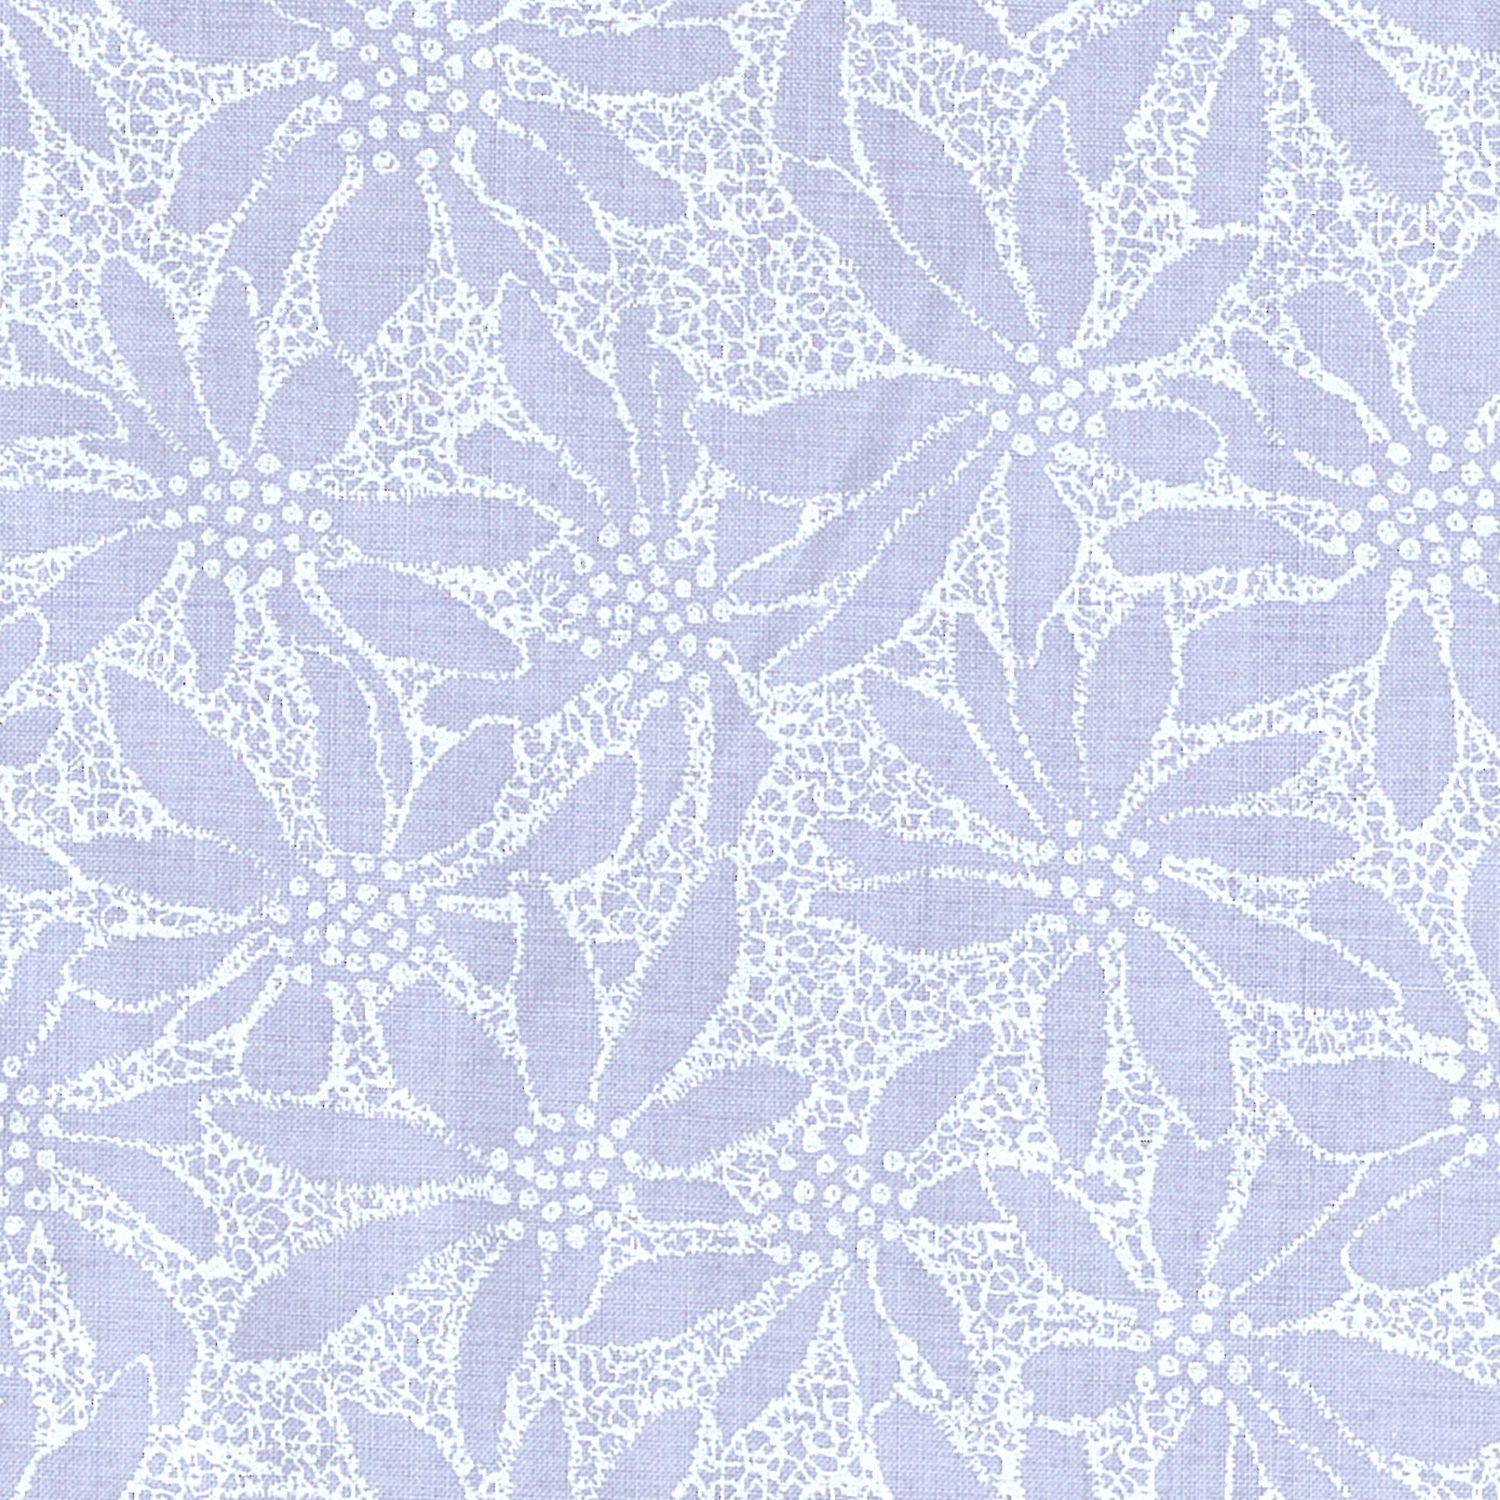 【WEB限定・原反特価】■4022-660-7D 60ローン 手描き花柄 薄紫 約110cm巾 (巻)